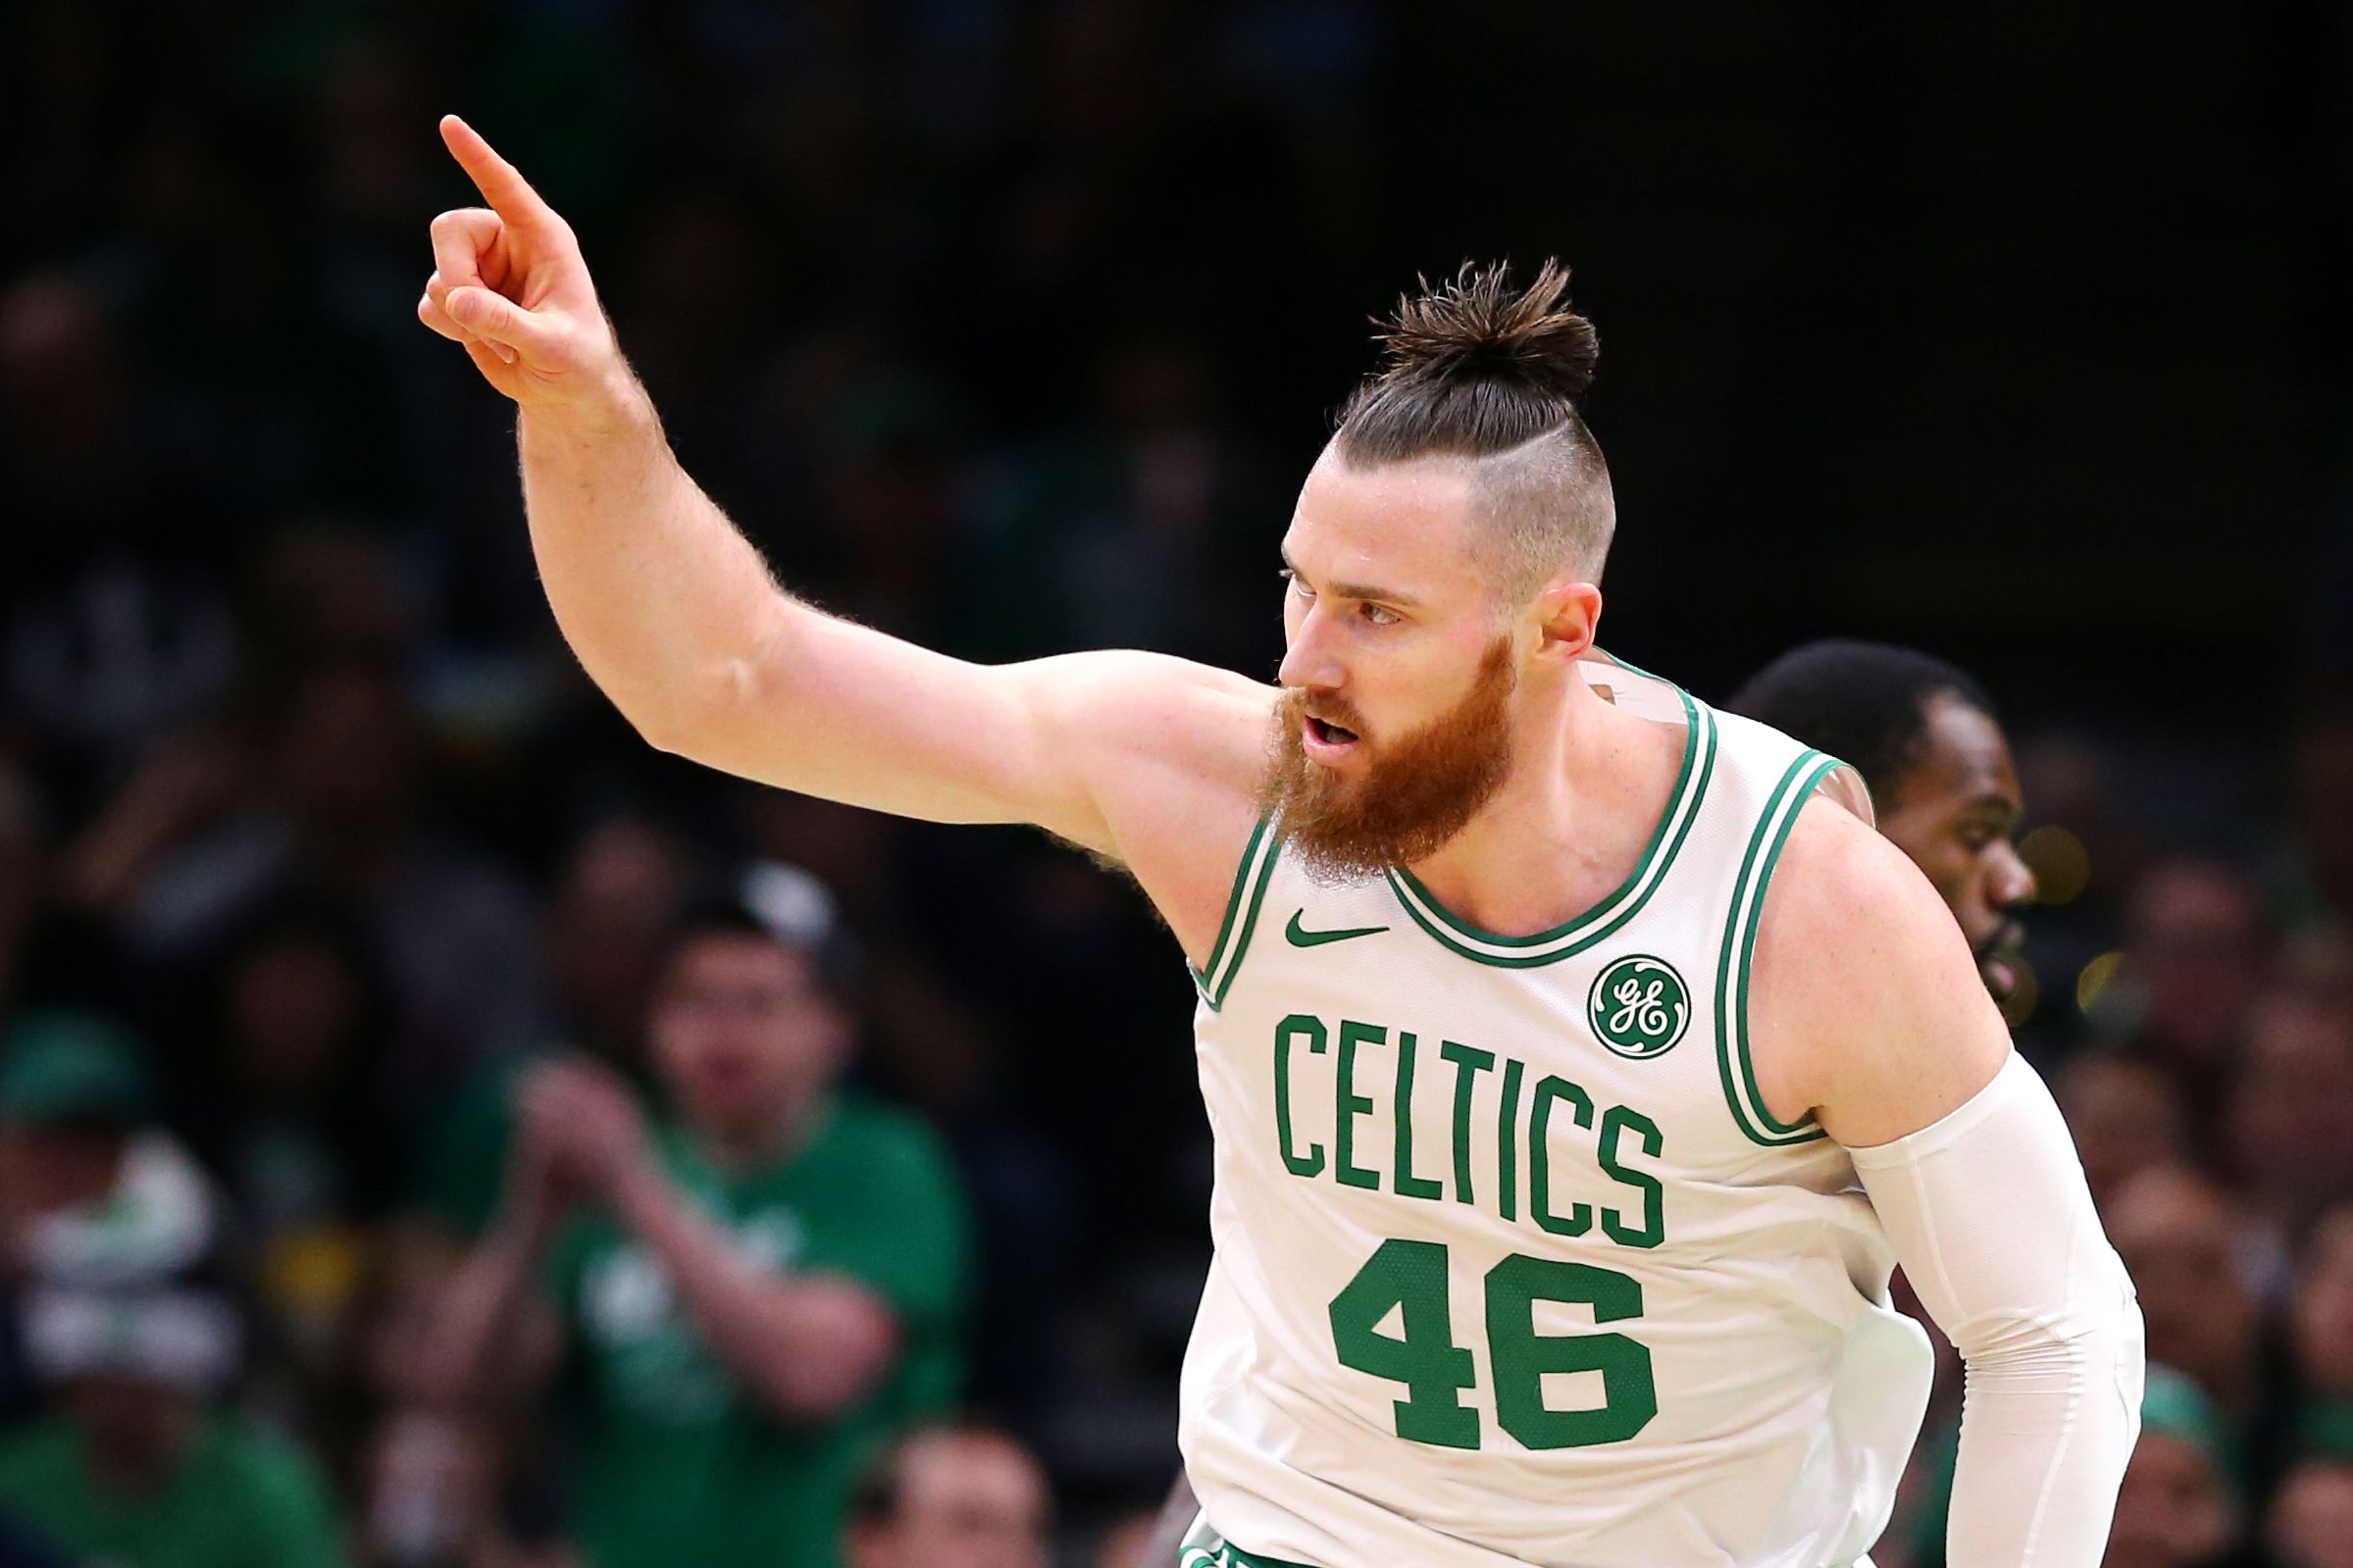 Suns make series of moves, including signing former Celtics player